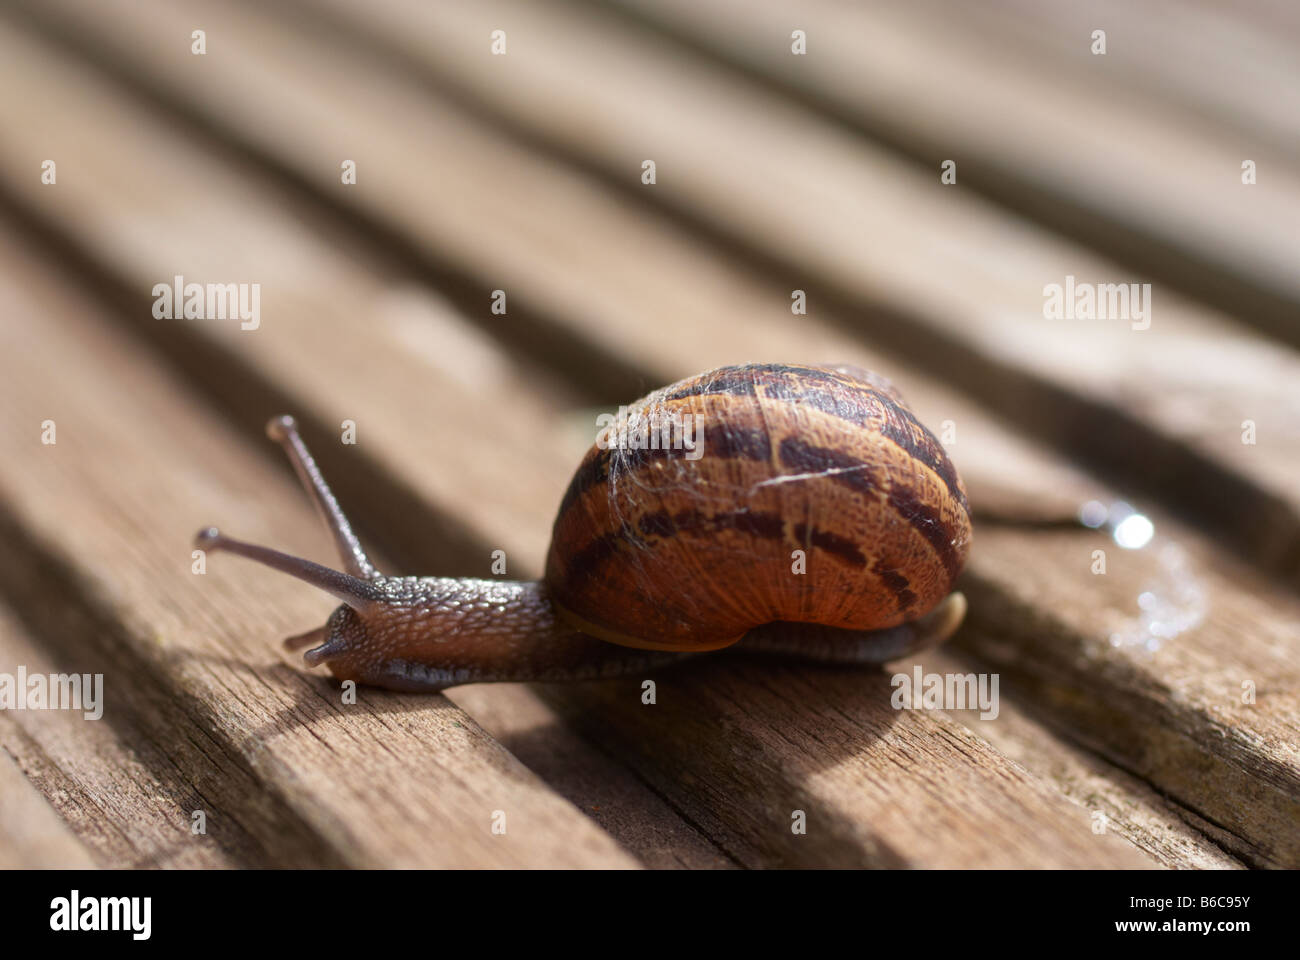 Eye to eye with a garden snail Stock Photo